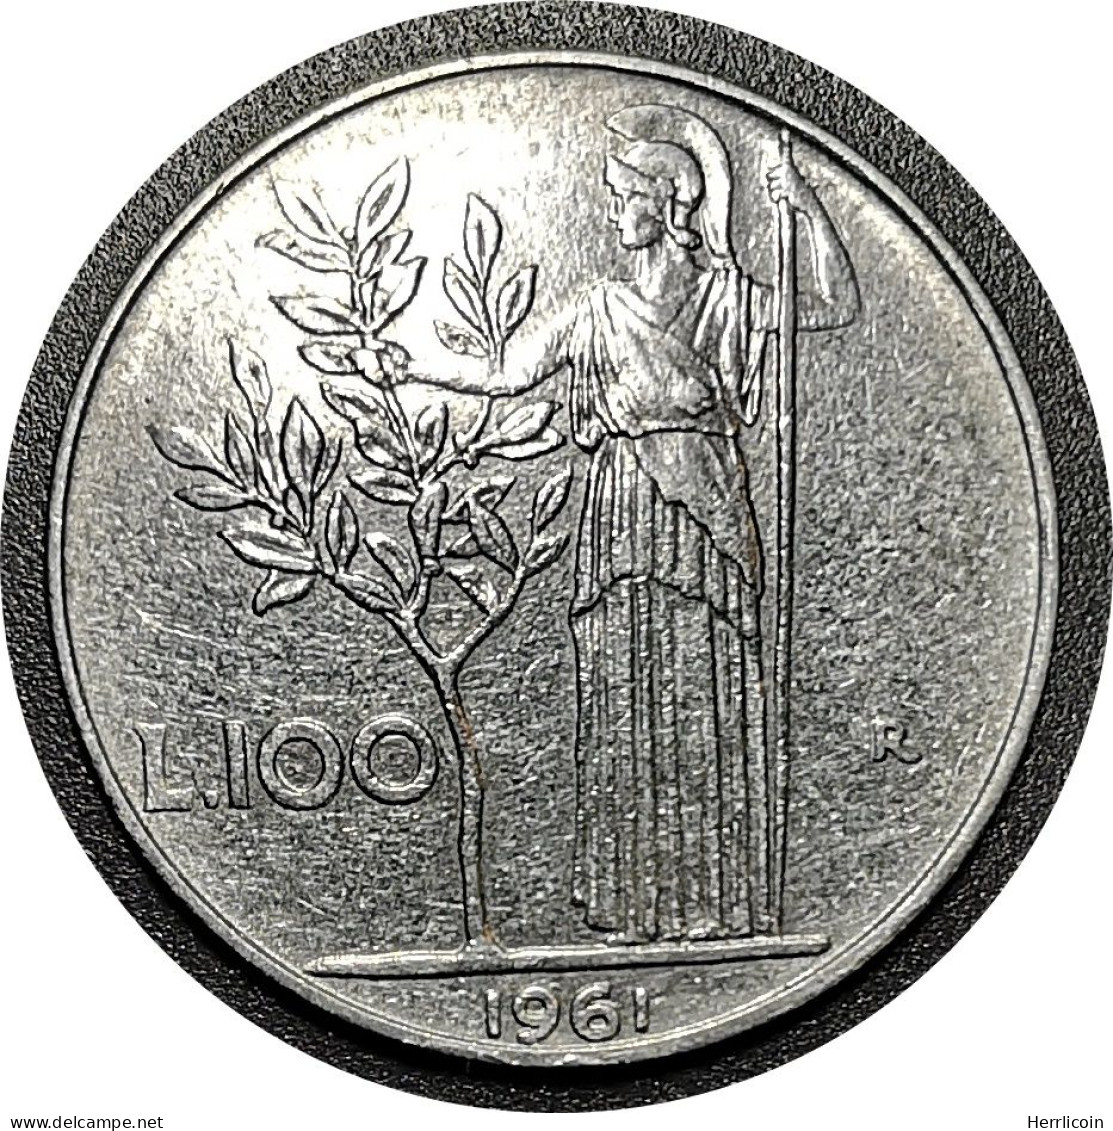 1961 - 100 Lire - Italie [KM#96.1] - 100 Liras